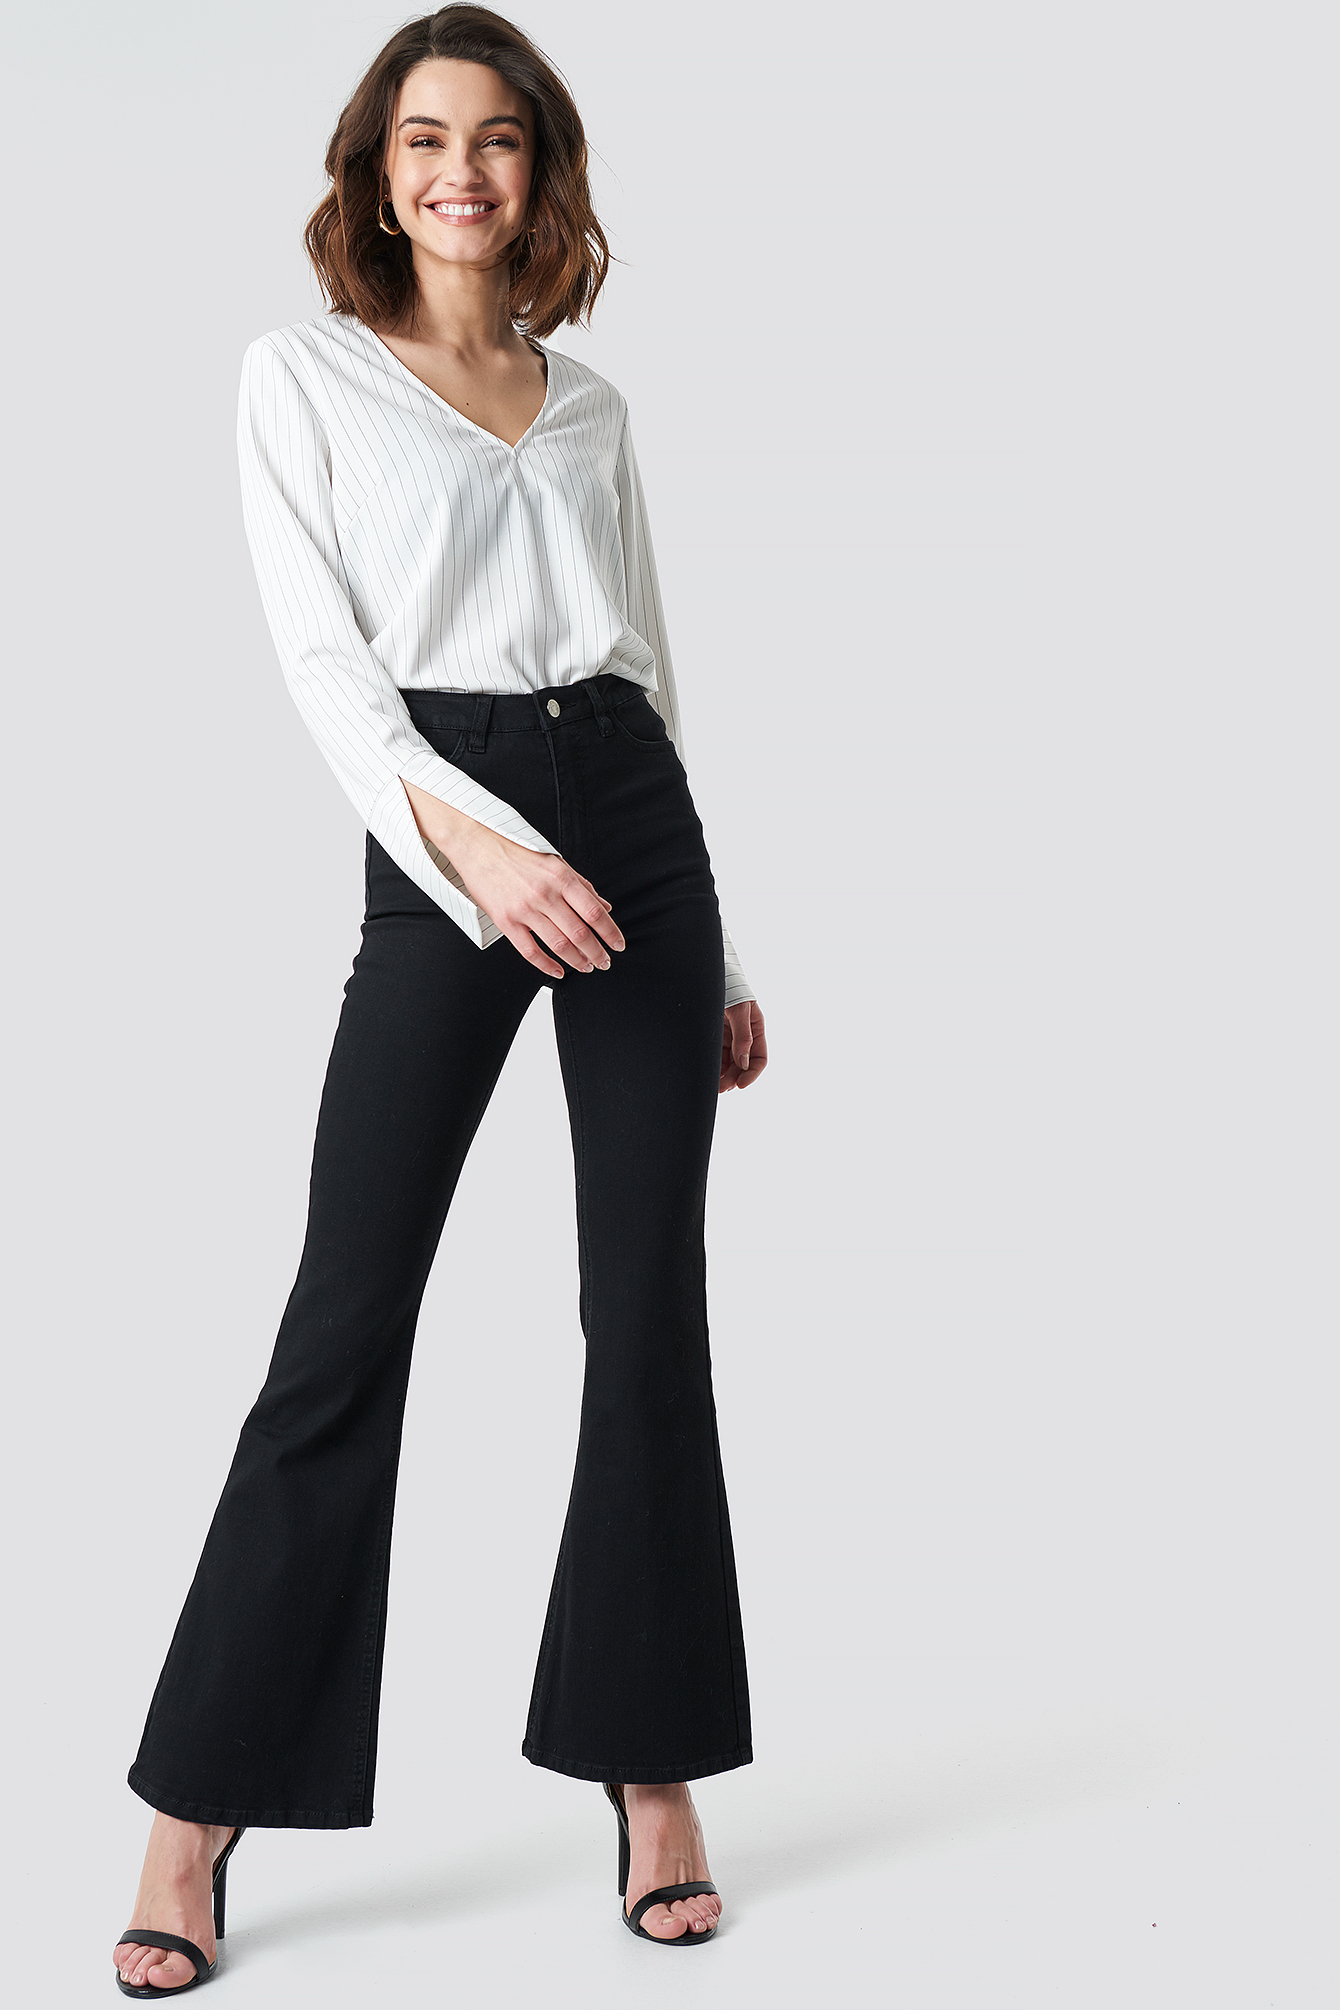 Women's High-rise Bootcut Jeans - Universal Thread™ Black : Target